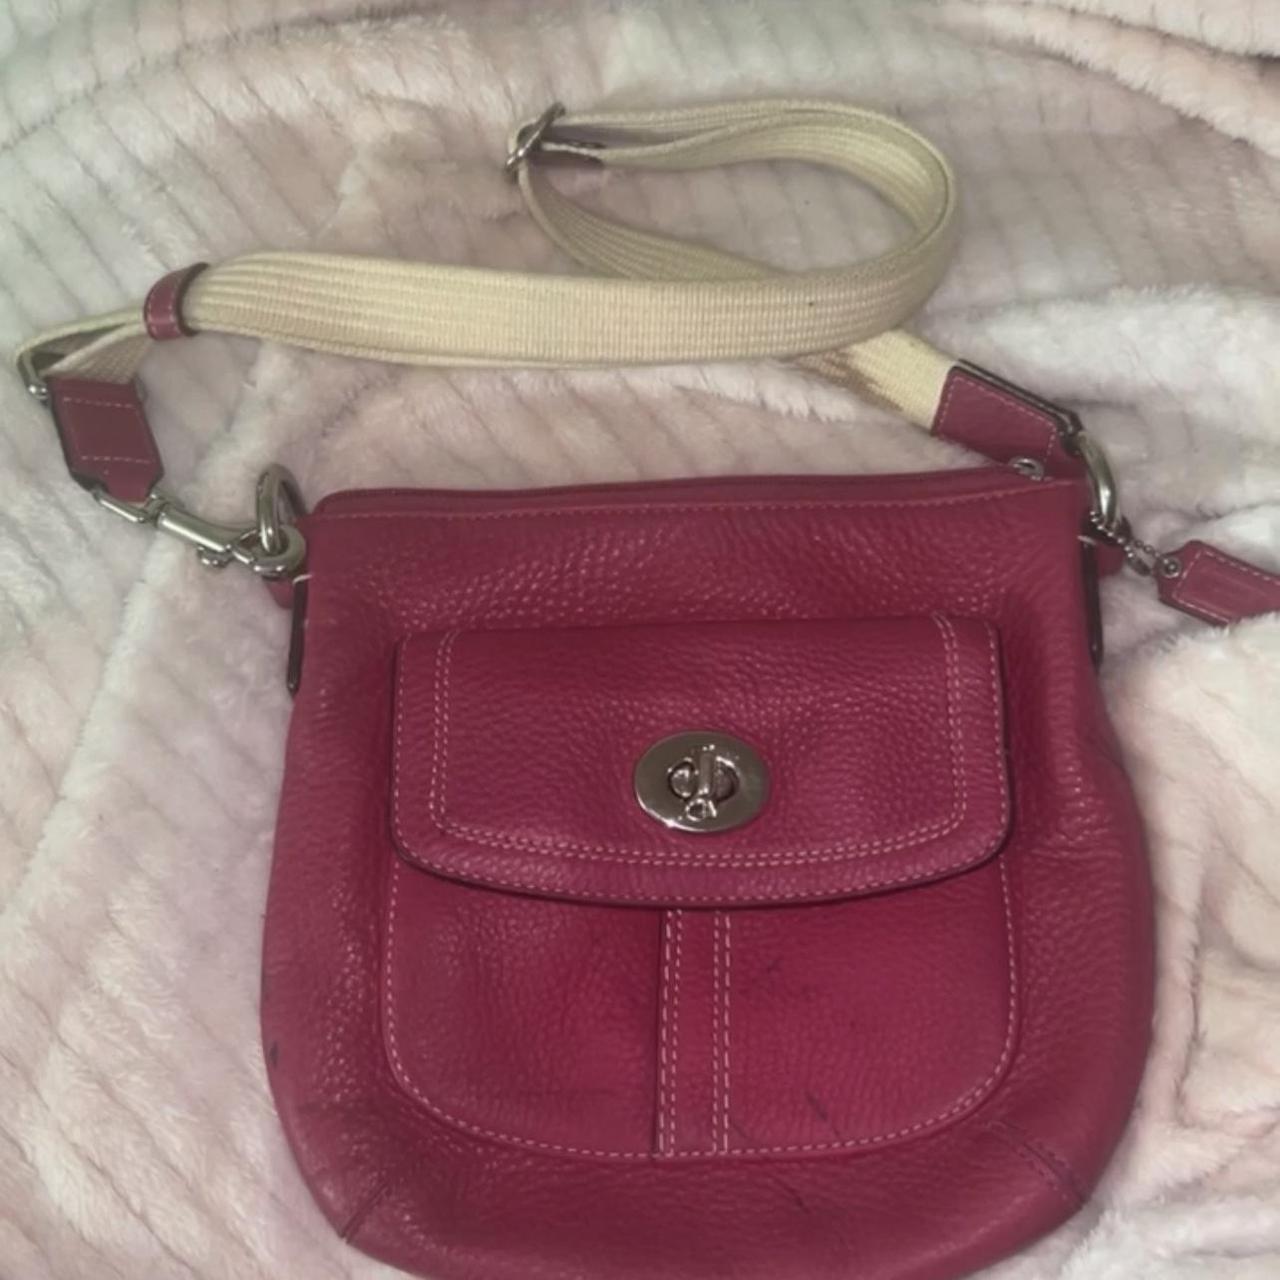 Cute Coach Wrist size purse | Purses, Coach purses, Bags